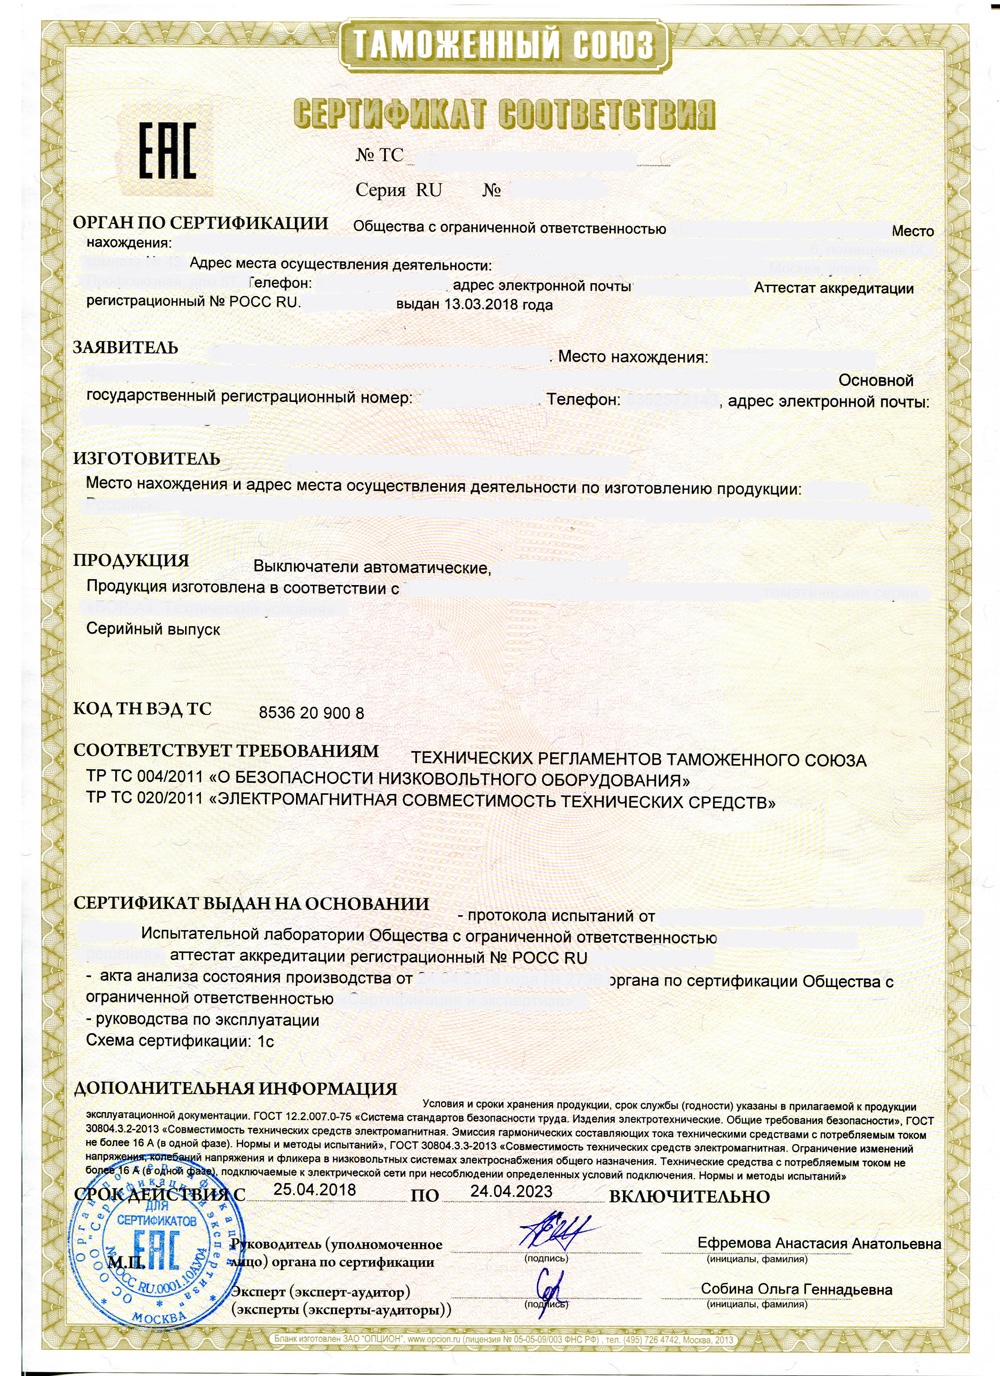 Certificato TR CU 004 020